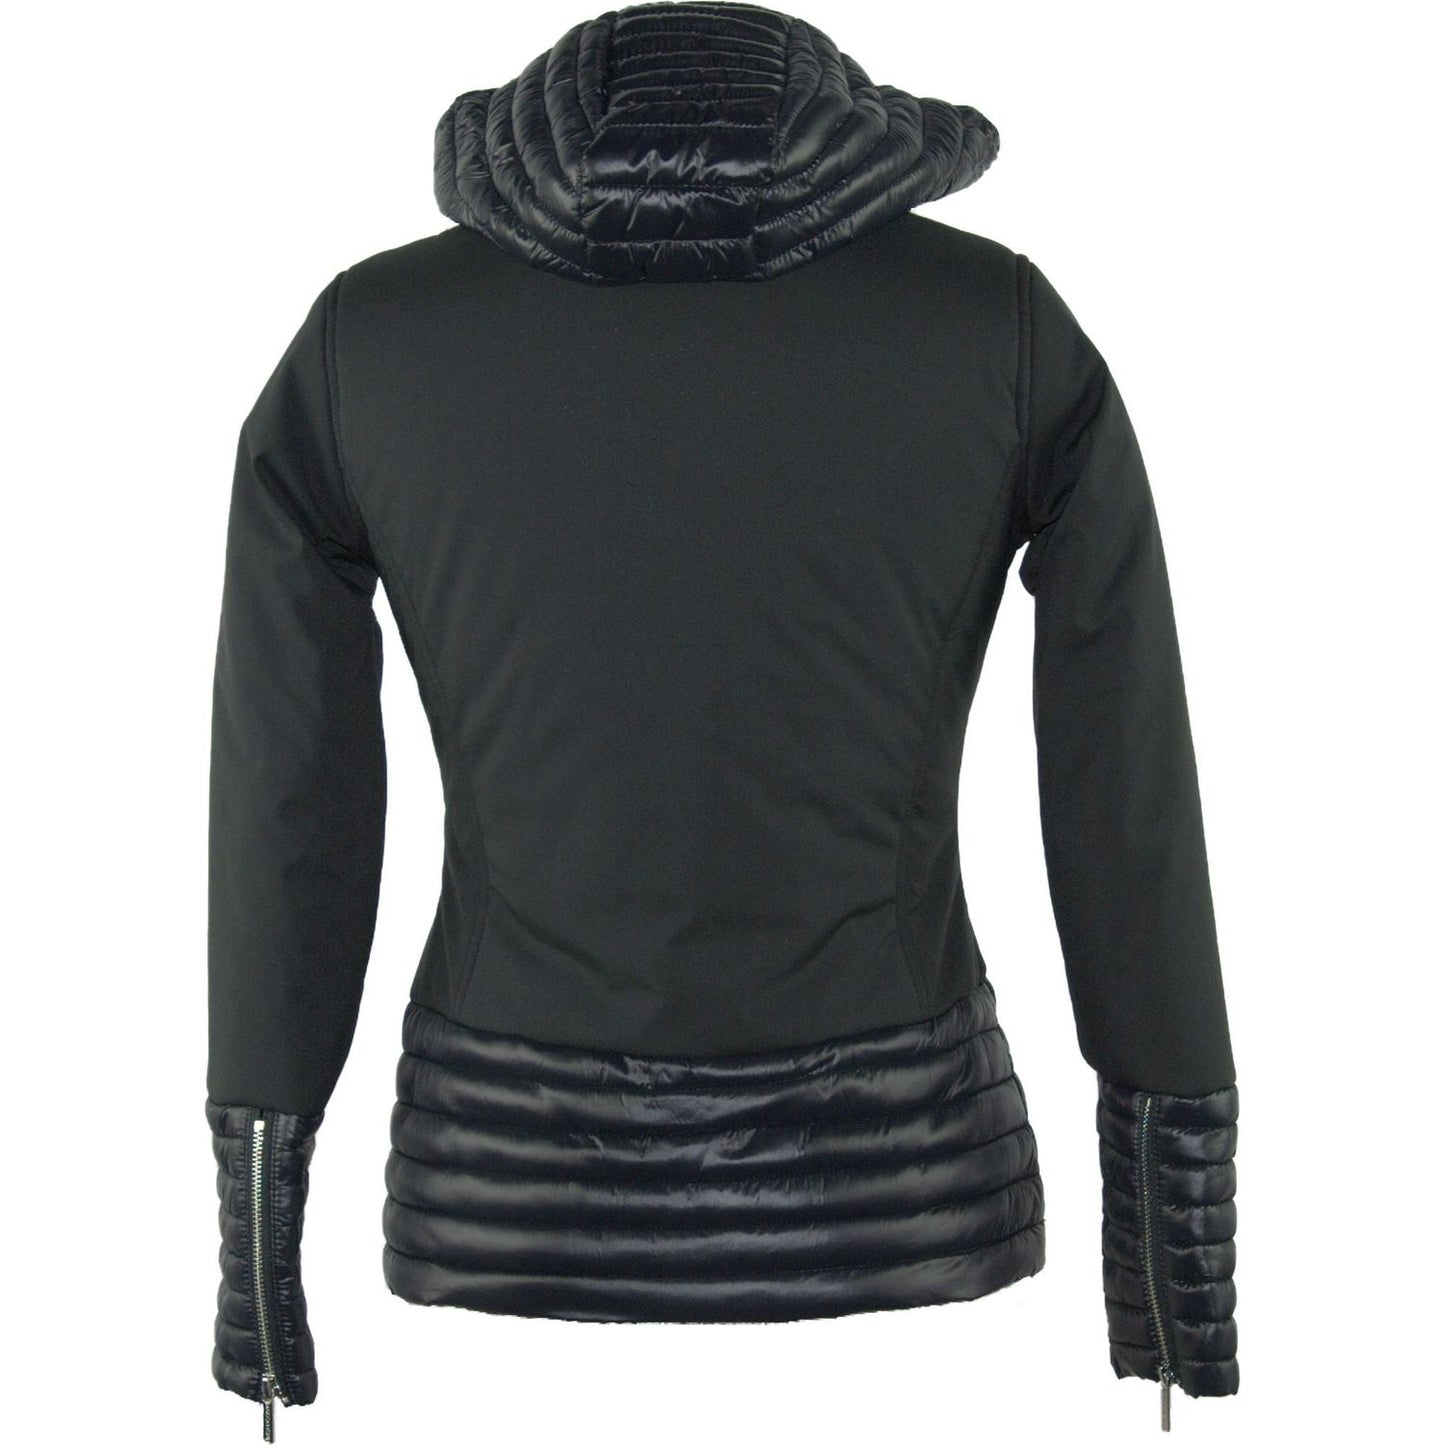 Maison Espin Chic Black Down Jacket Outerwear Piece black-polyester-jackets-coat-2 WOMAN COATS & JACKETS stock_product_image_1651_273702056-efa66812-2b7.jpg